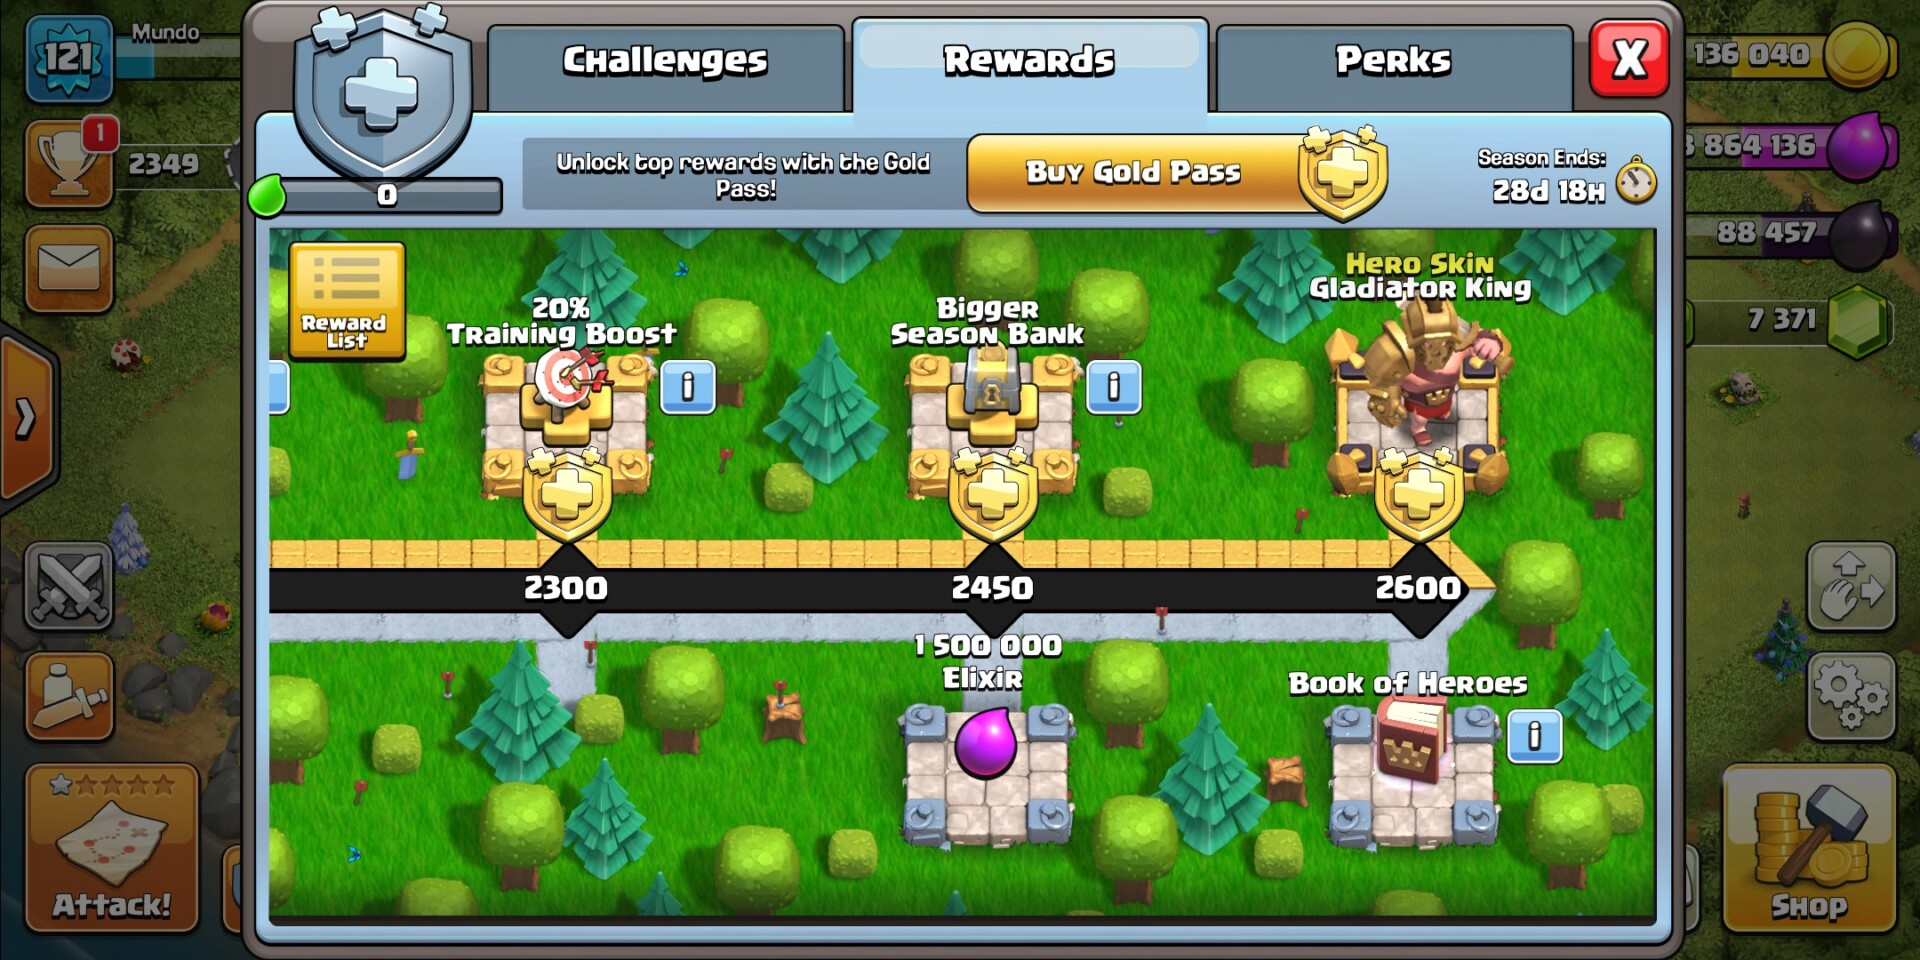 The clash of clans seasonal rewards track screenshot.